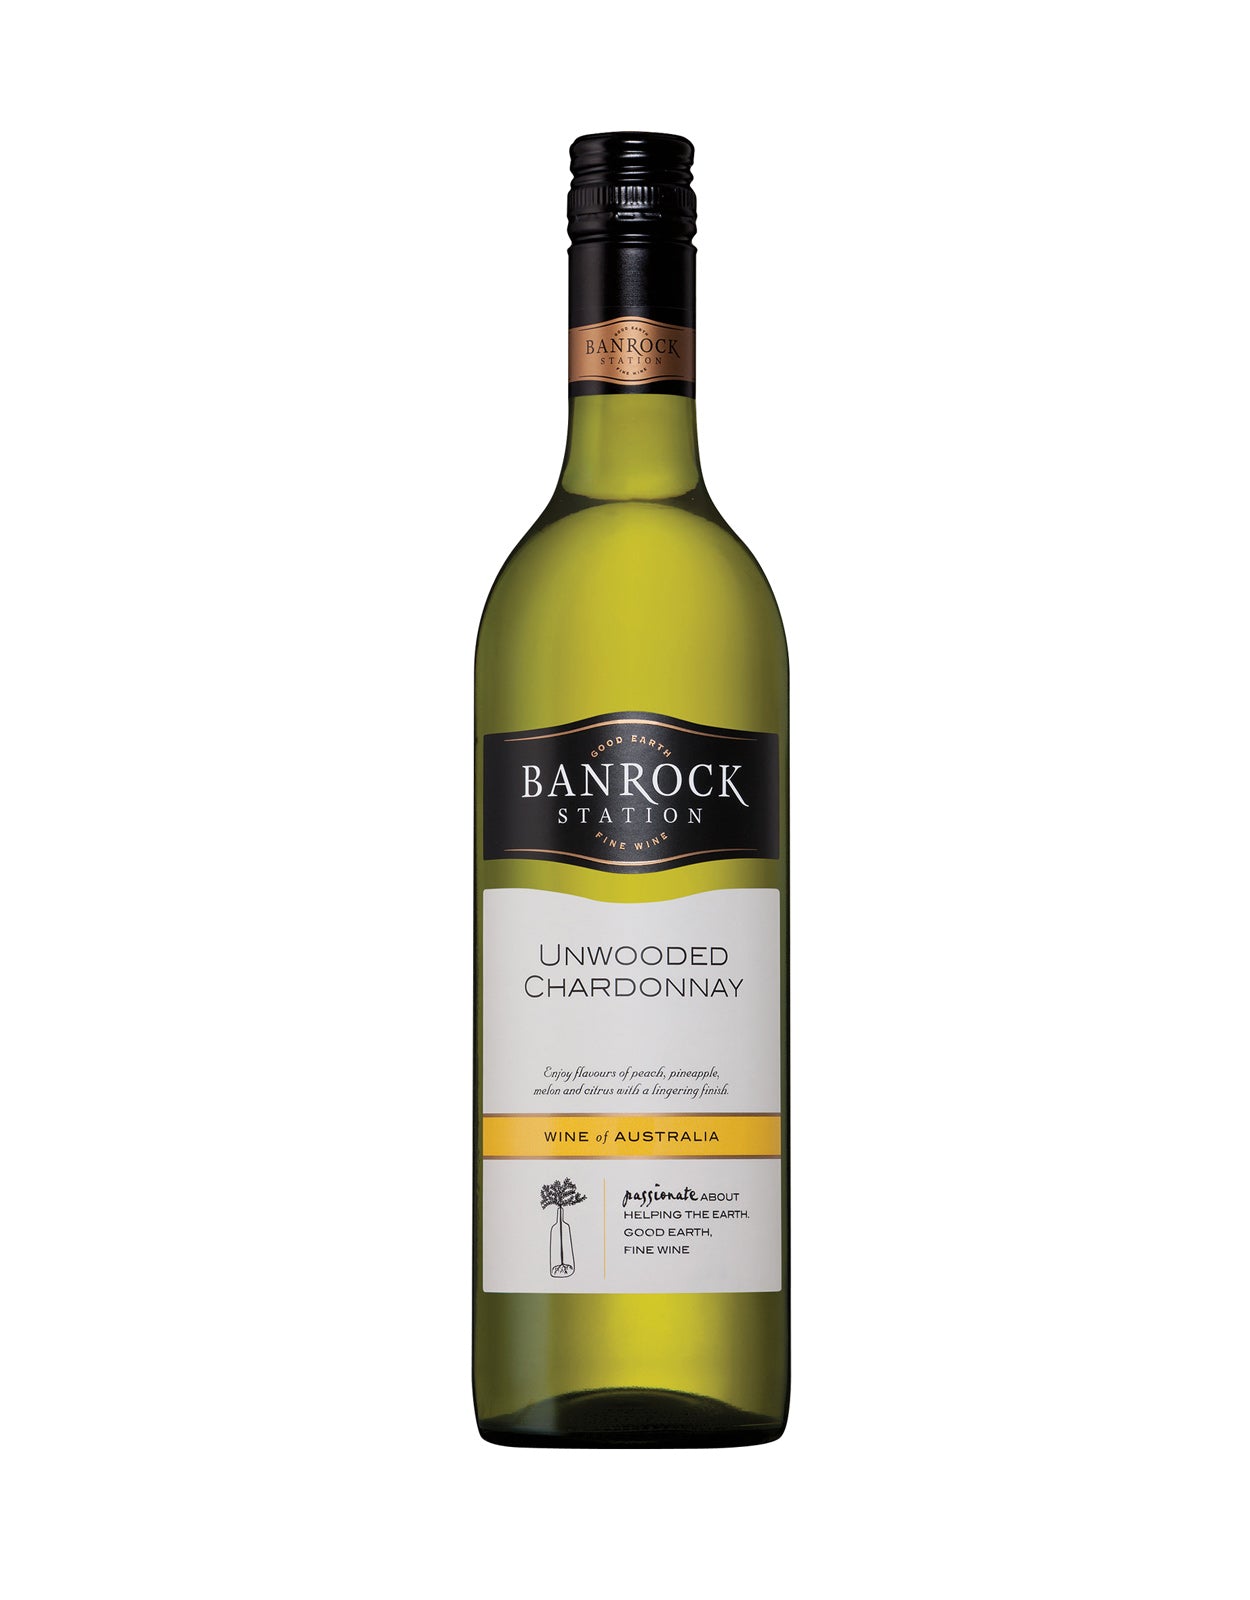 Banrock Chardonnay Unwooded 2017